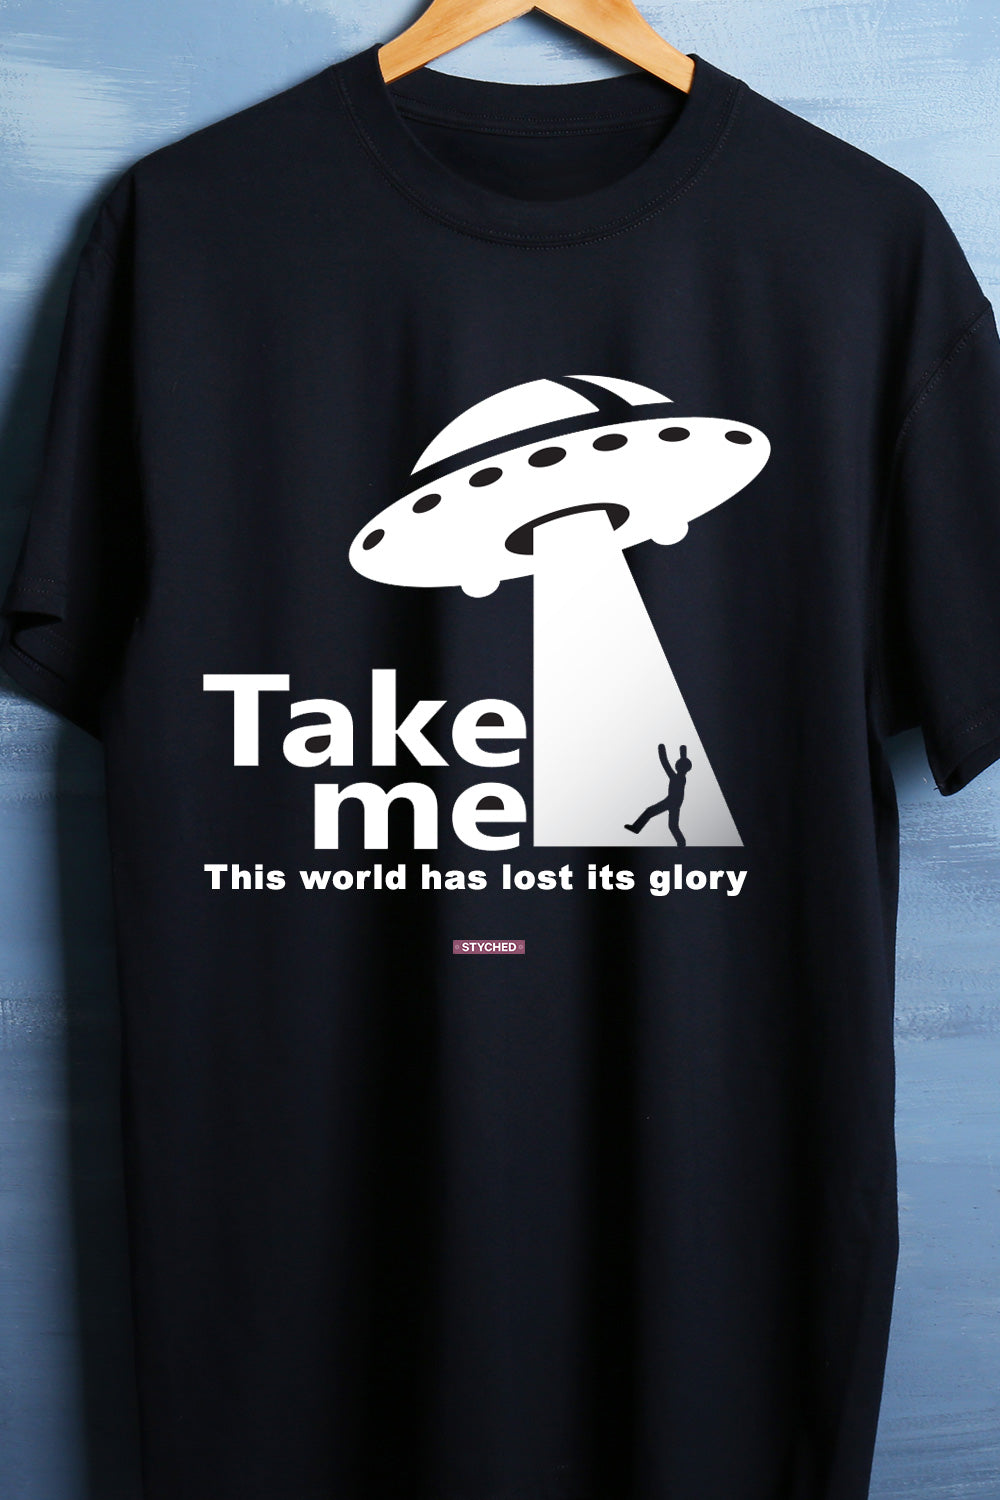 Take me - This world has lost its glory - Black funky casual tshirt